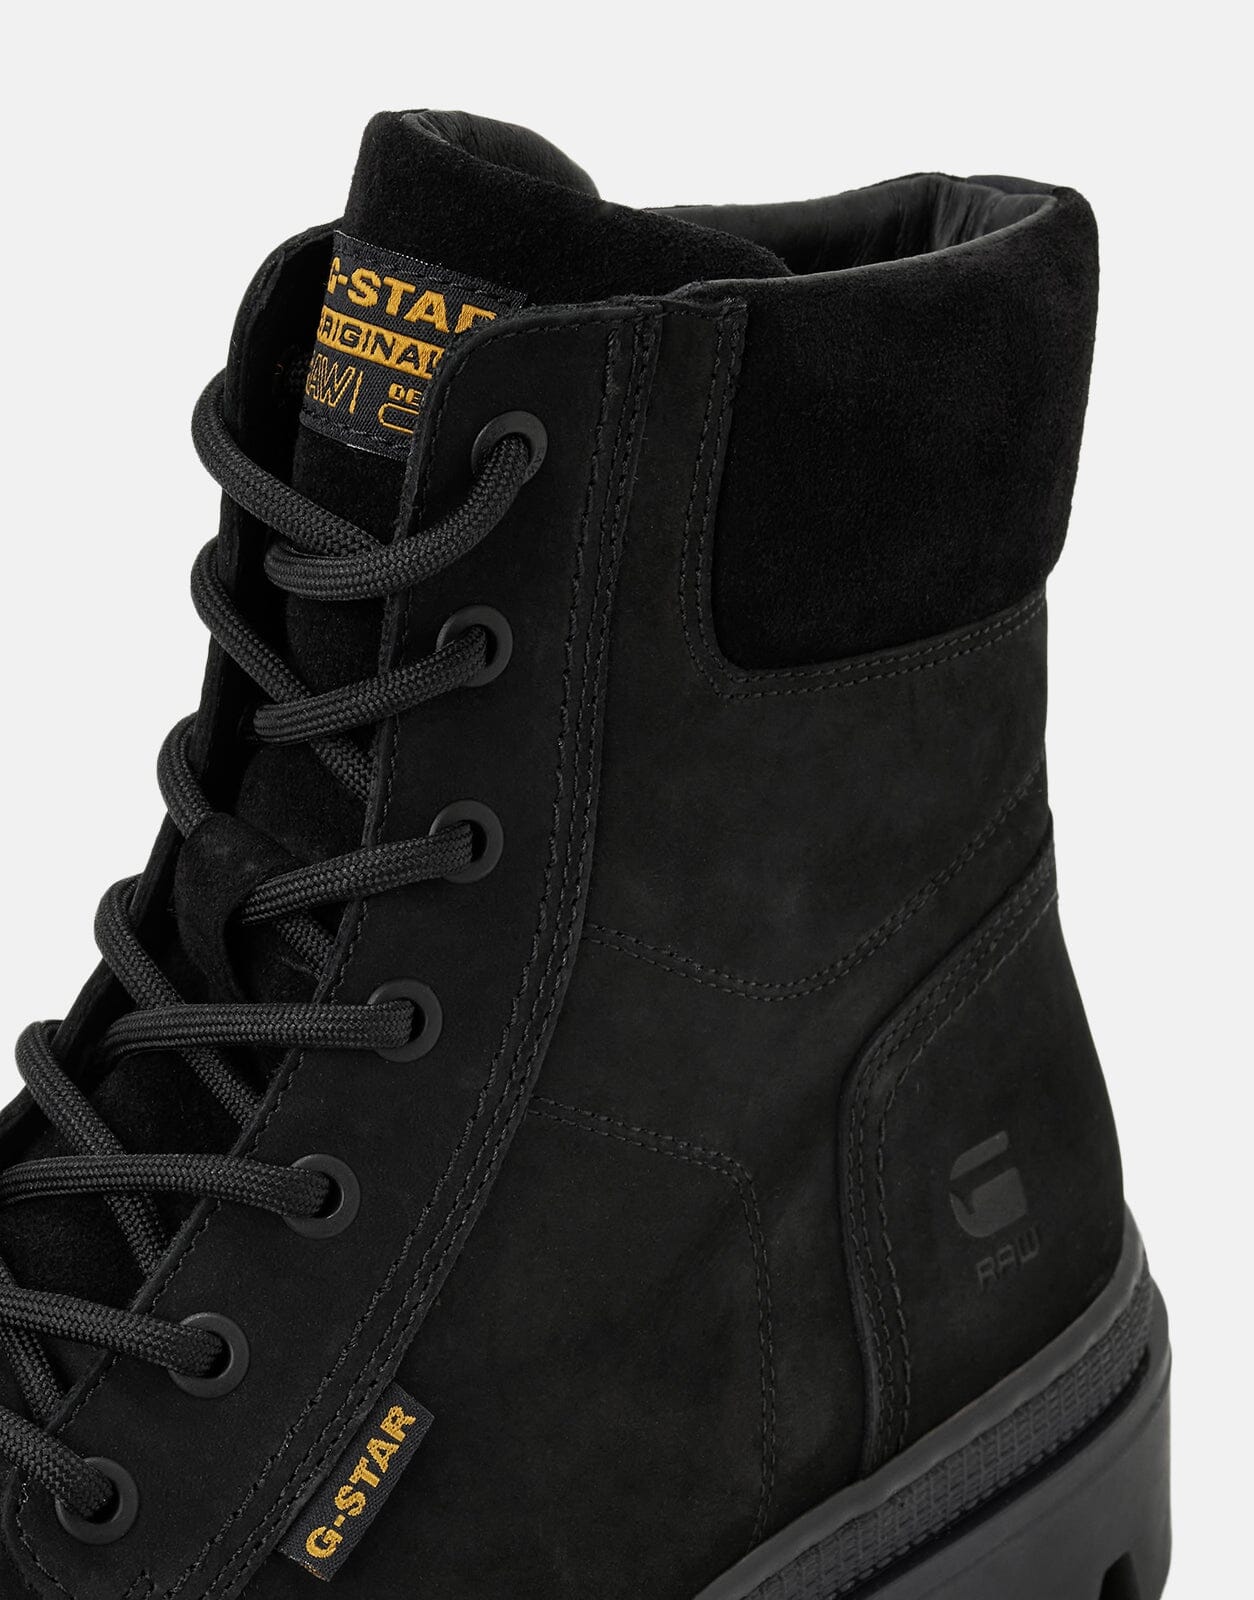 G-Star RAW Noxer High Nubuck Black Boots - Subwear